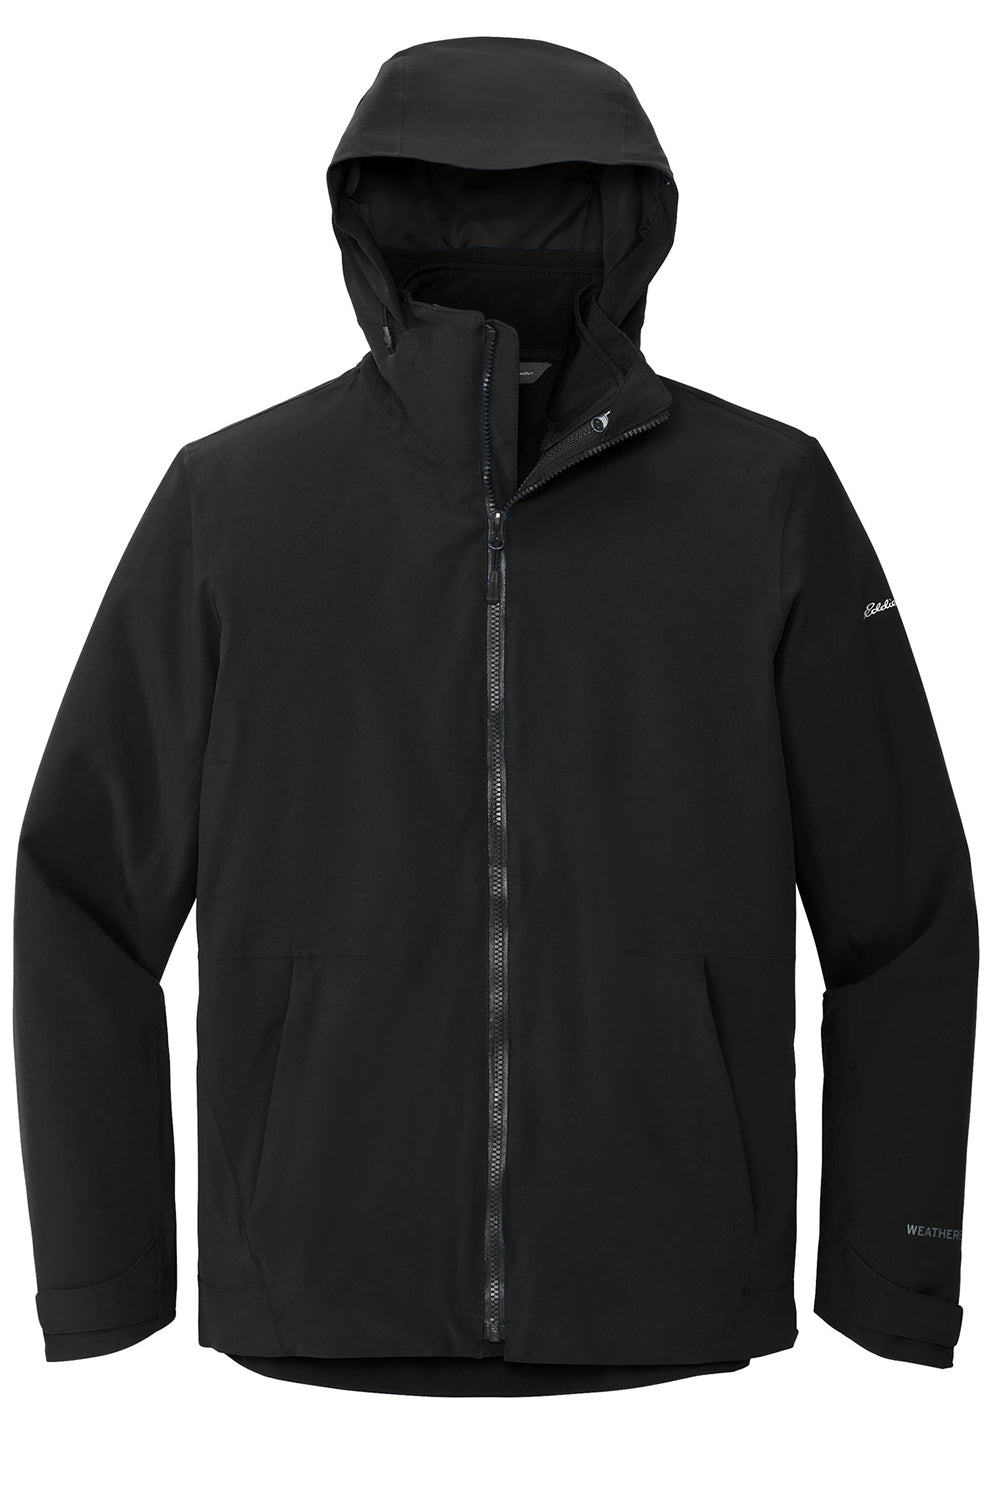 Eddie Bauer EB656 Mens WeatherEdge 3-in-1 Water Resistant Full Zip Hooded Jacket Black/Storm Grey Flat Front